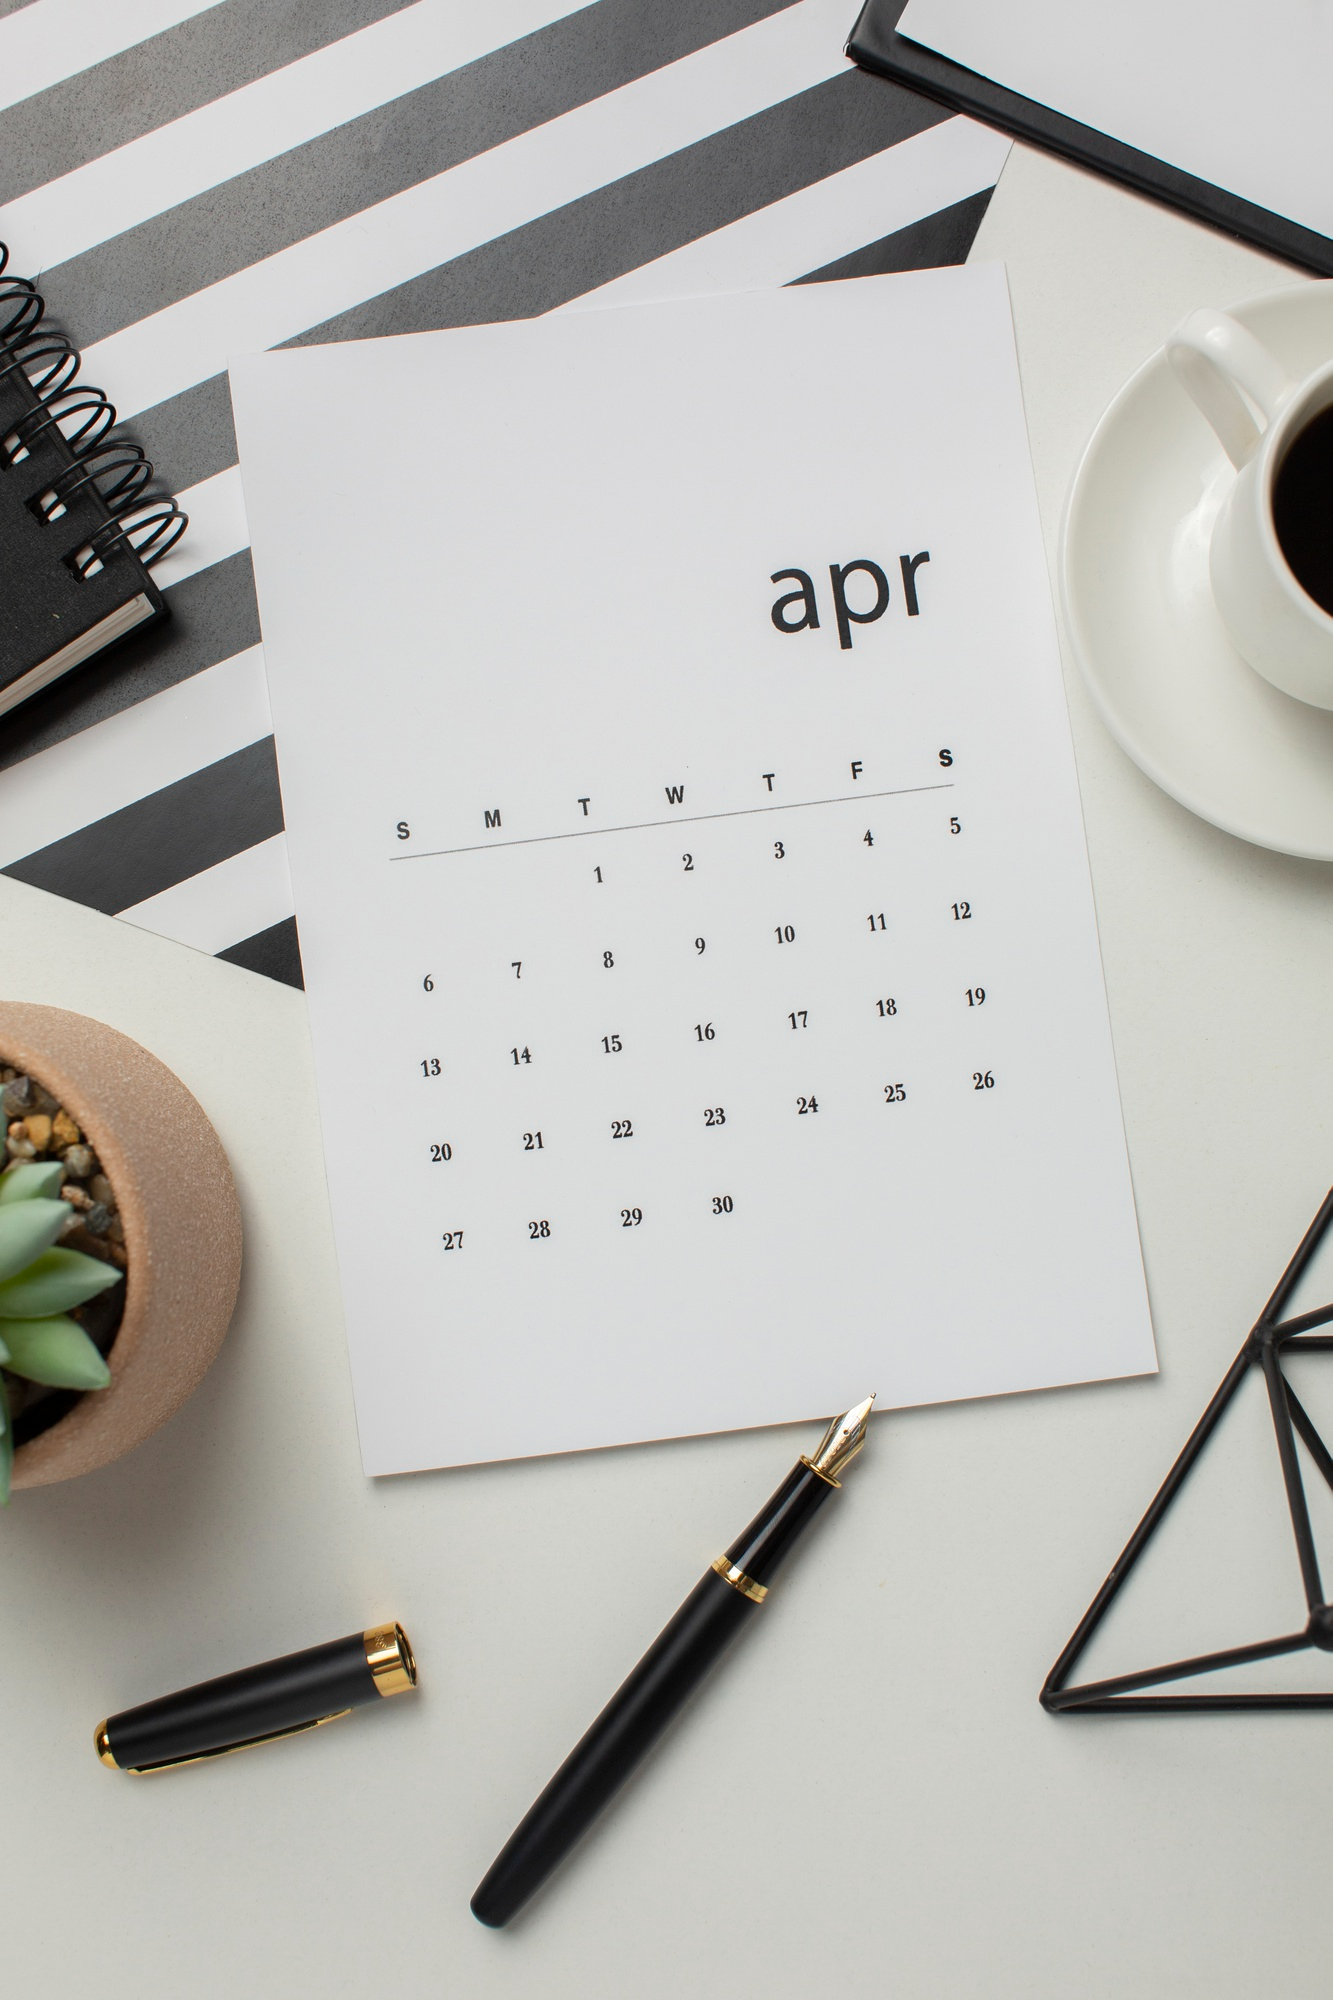 An April calendar page with a pen | Source: Freepik